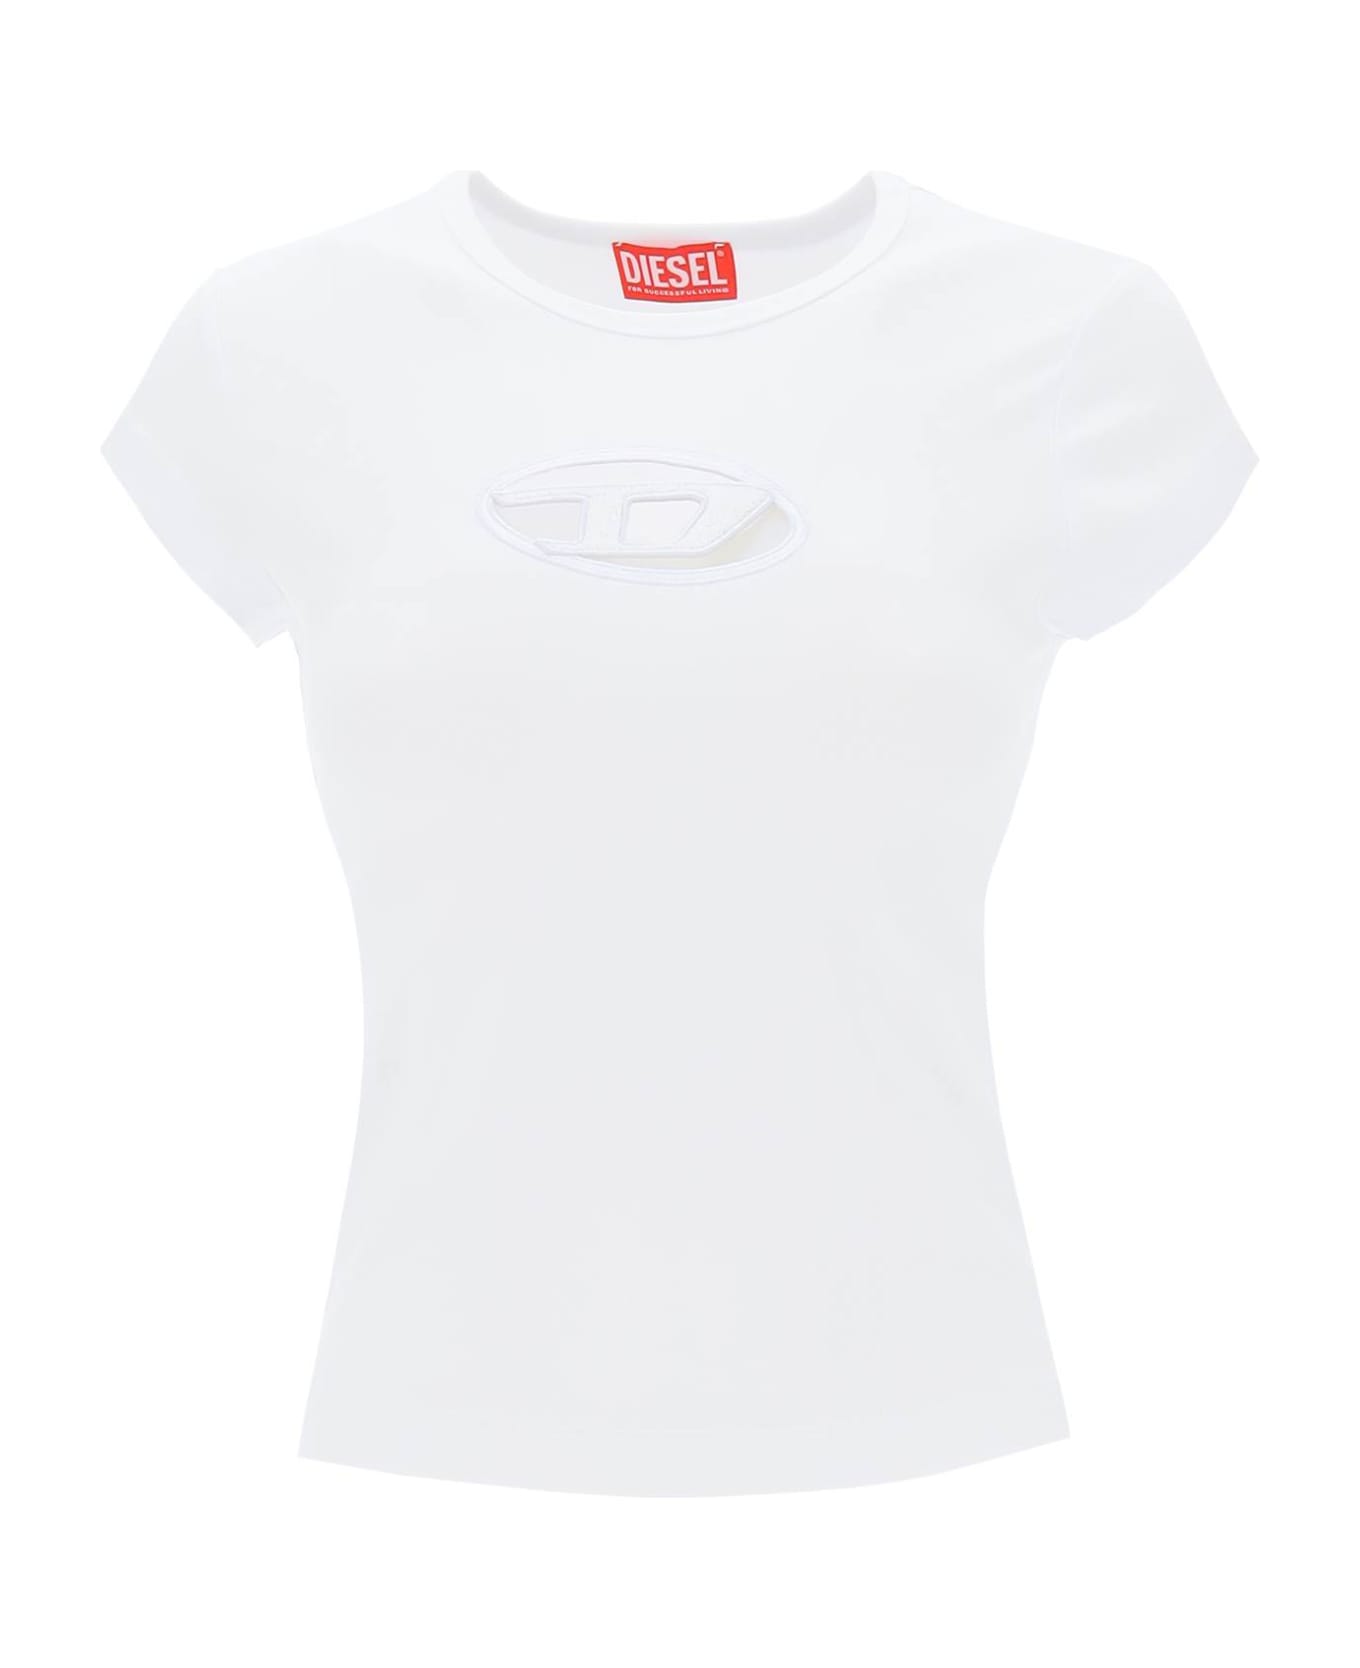 Diesel T-angie Cotton Crew-neck T-shirt - White Tシャツ